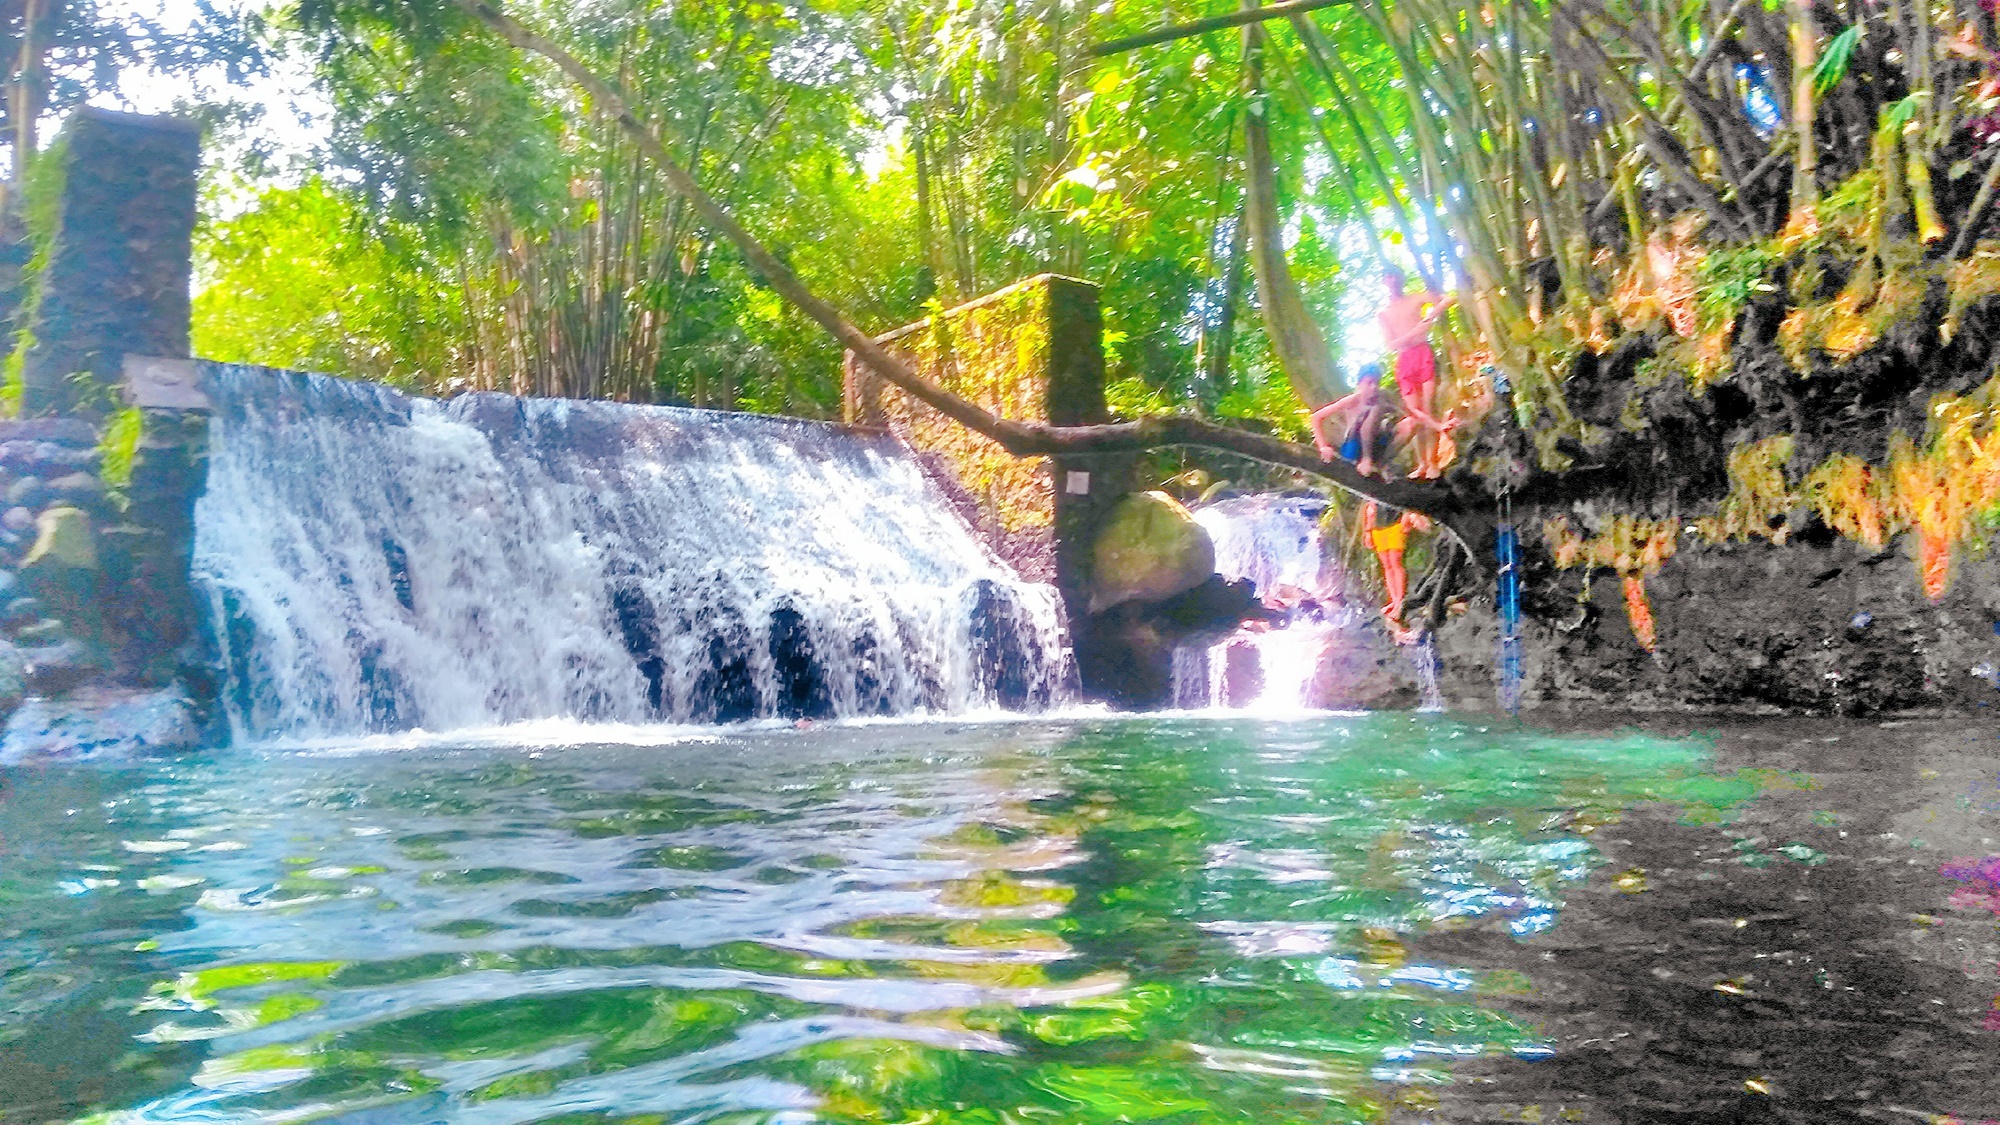 Kesegaran Blue Lagoon Tempat wisata di Jogja dengan kolam alami